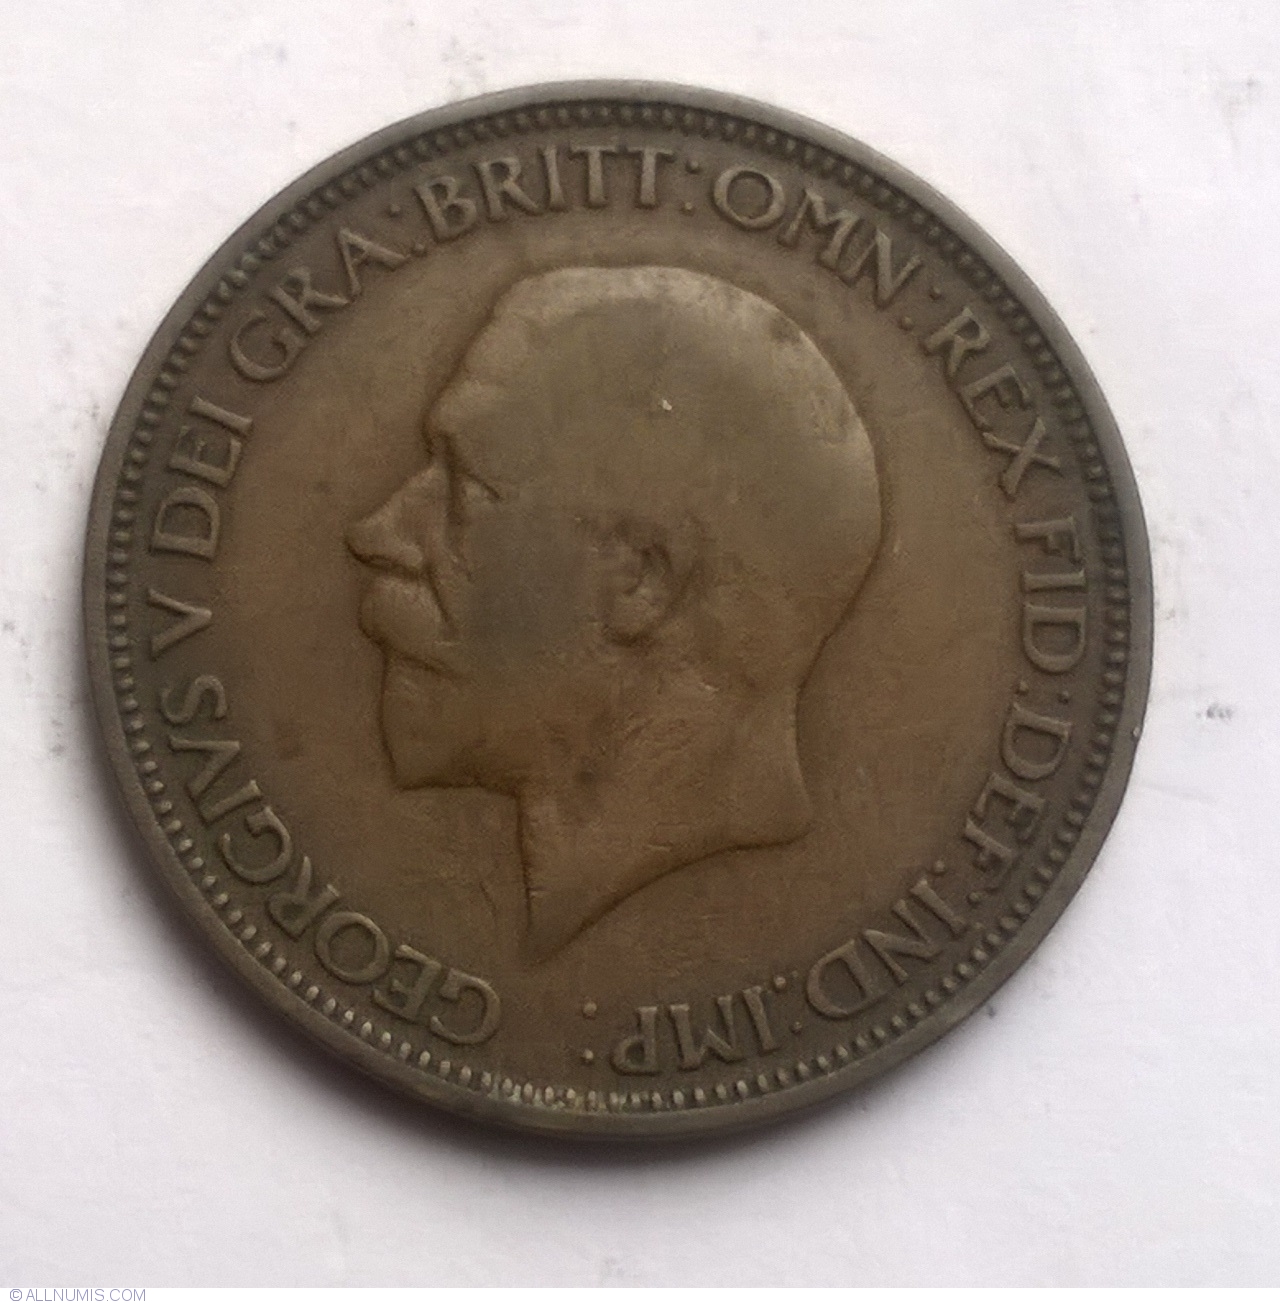 1934 half penny coin value